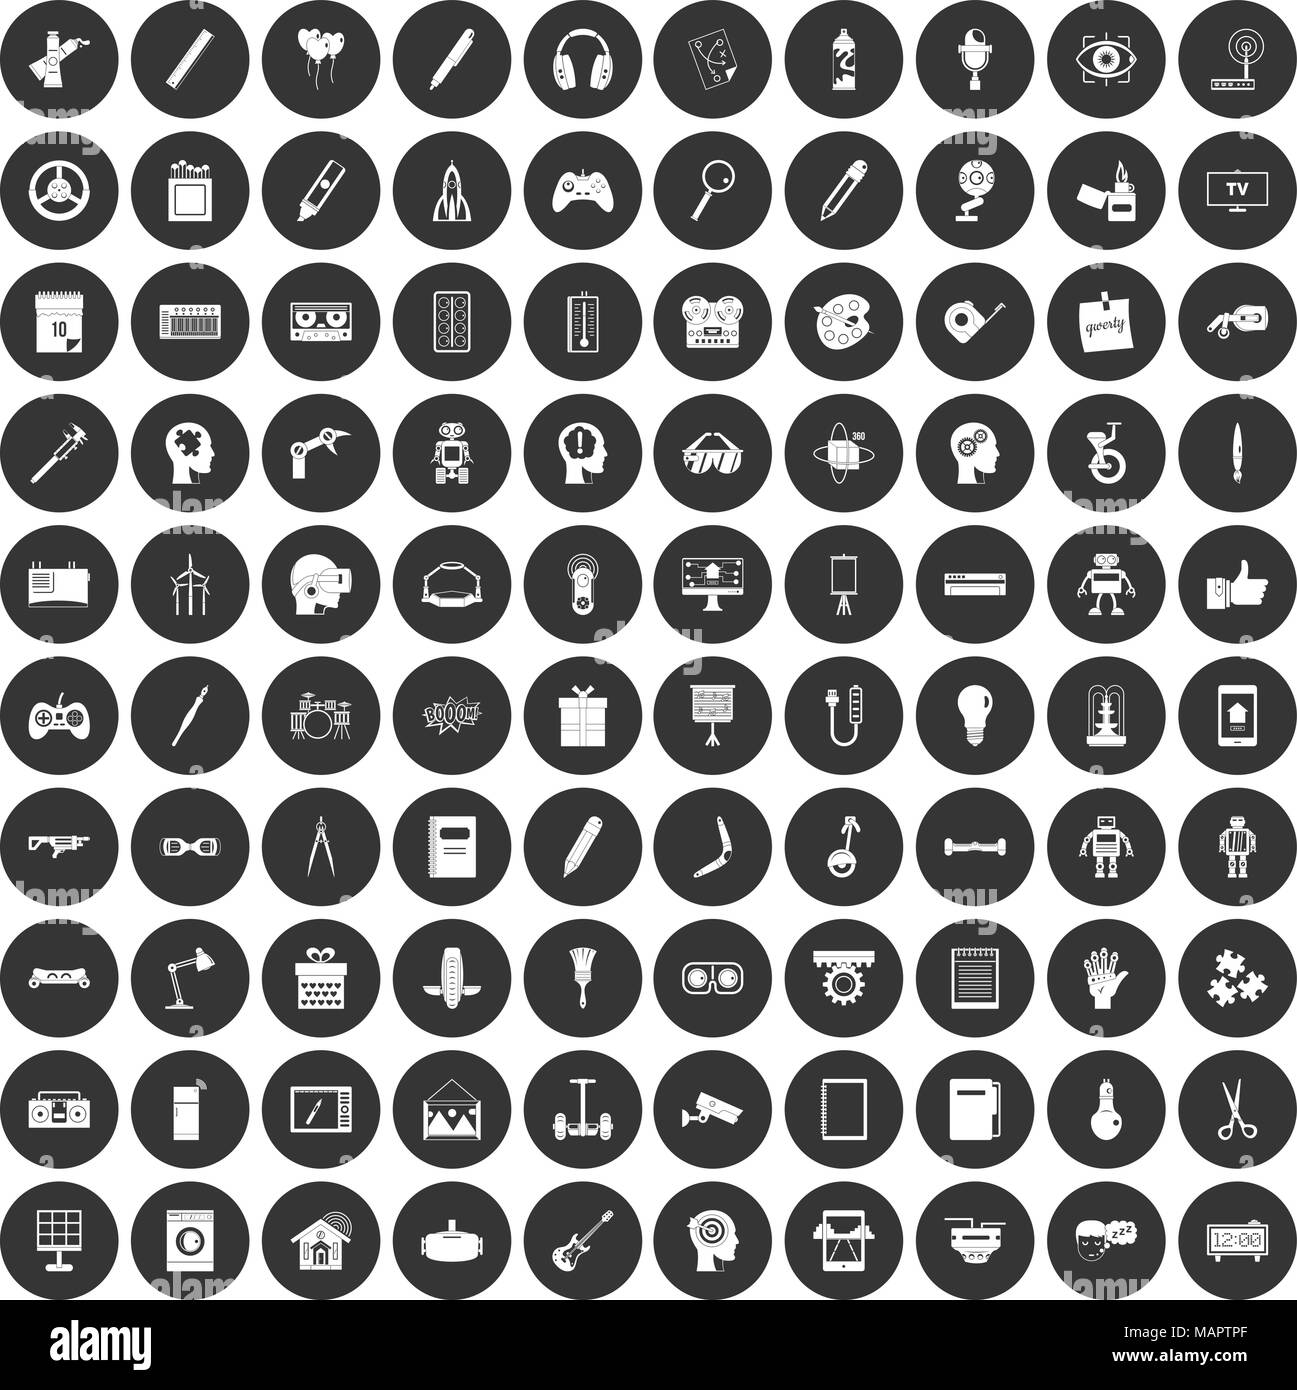 100 kreative Idee Icons Set schwarz Kreis Stock Vektor